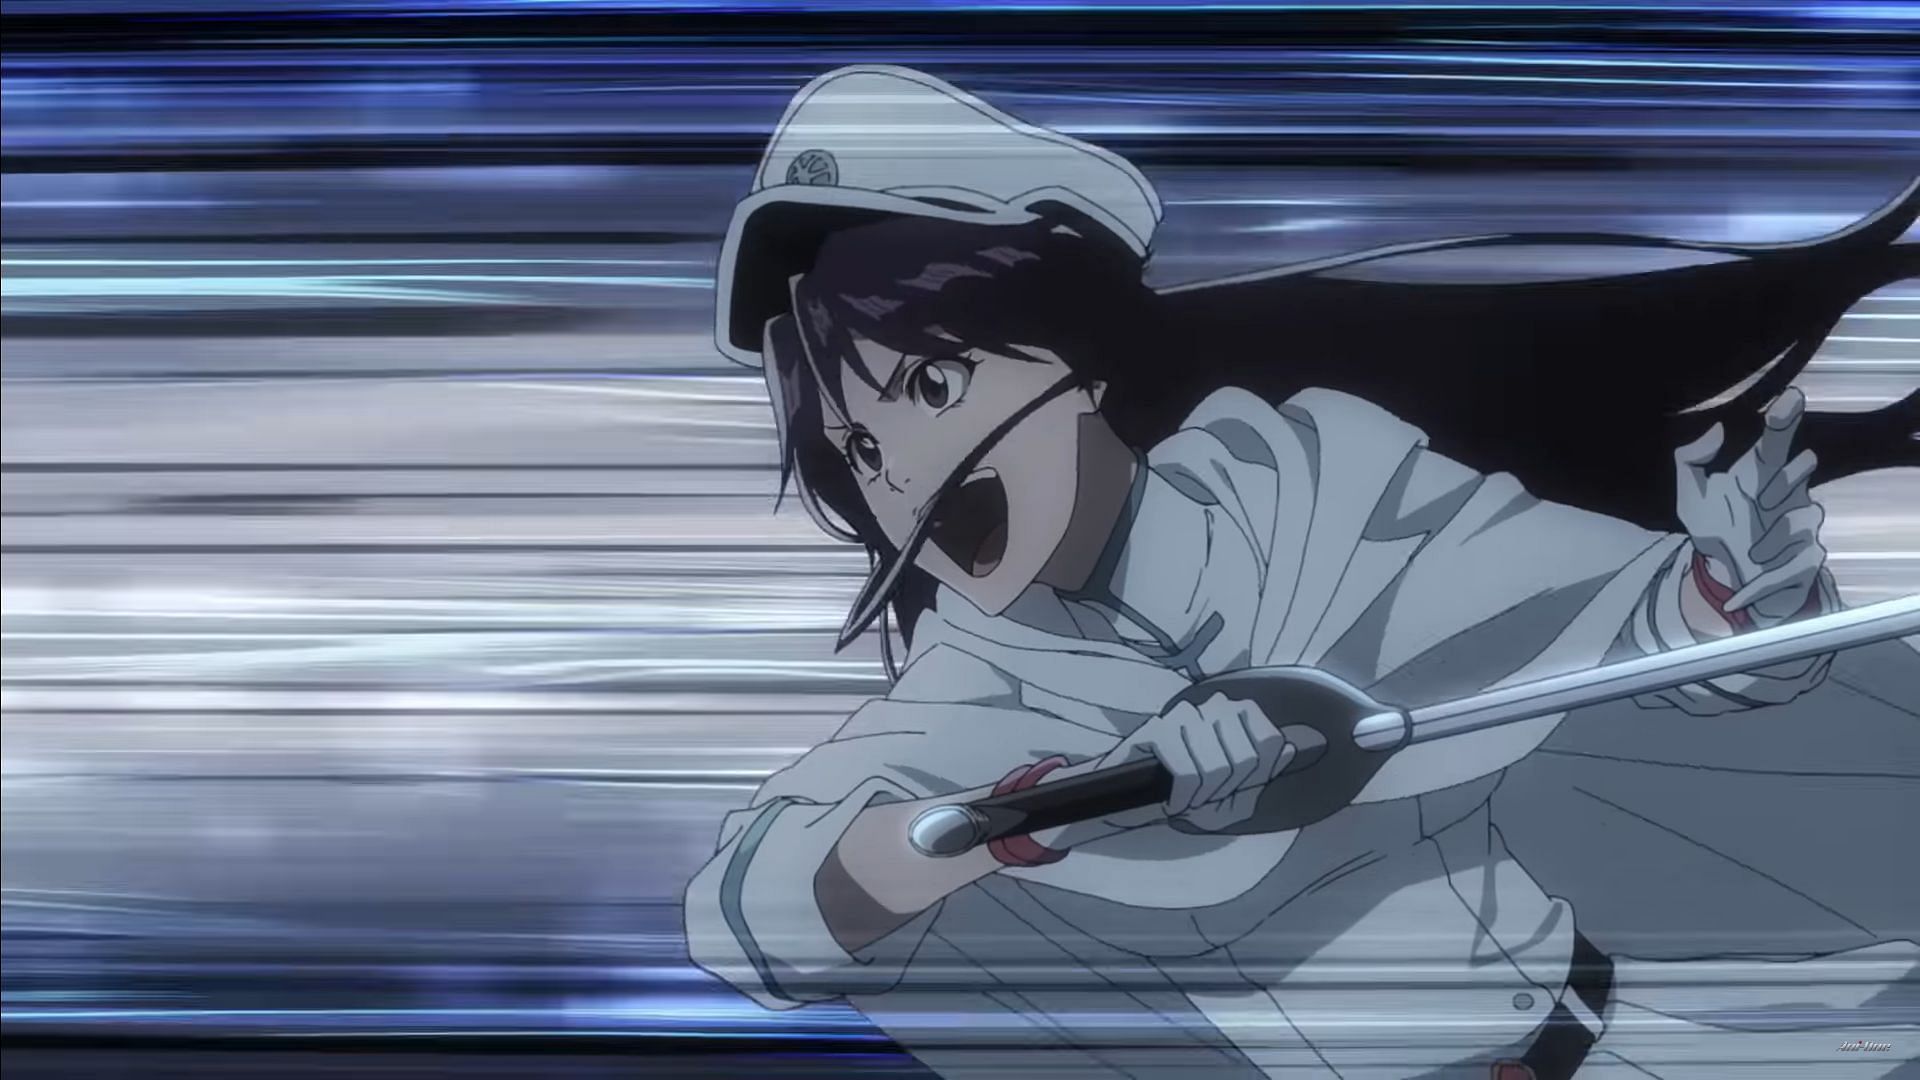 Bleach Anime Episode 4 Thousand Year Blood War - Kill The Shadow